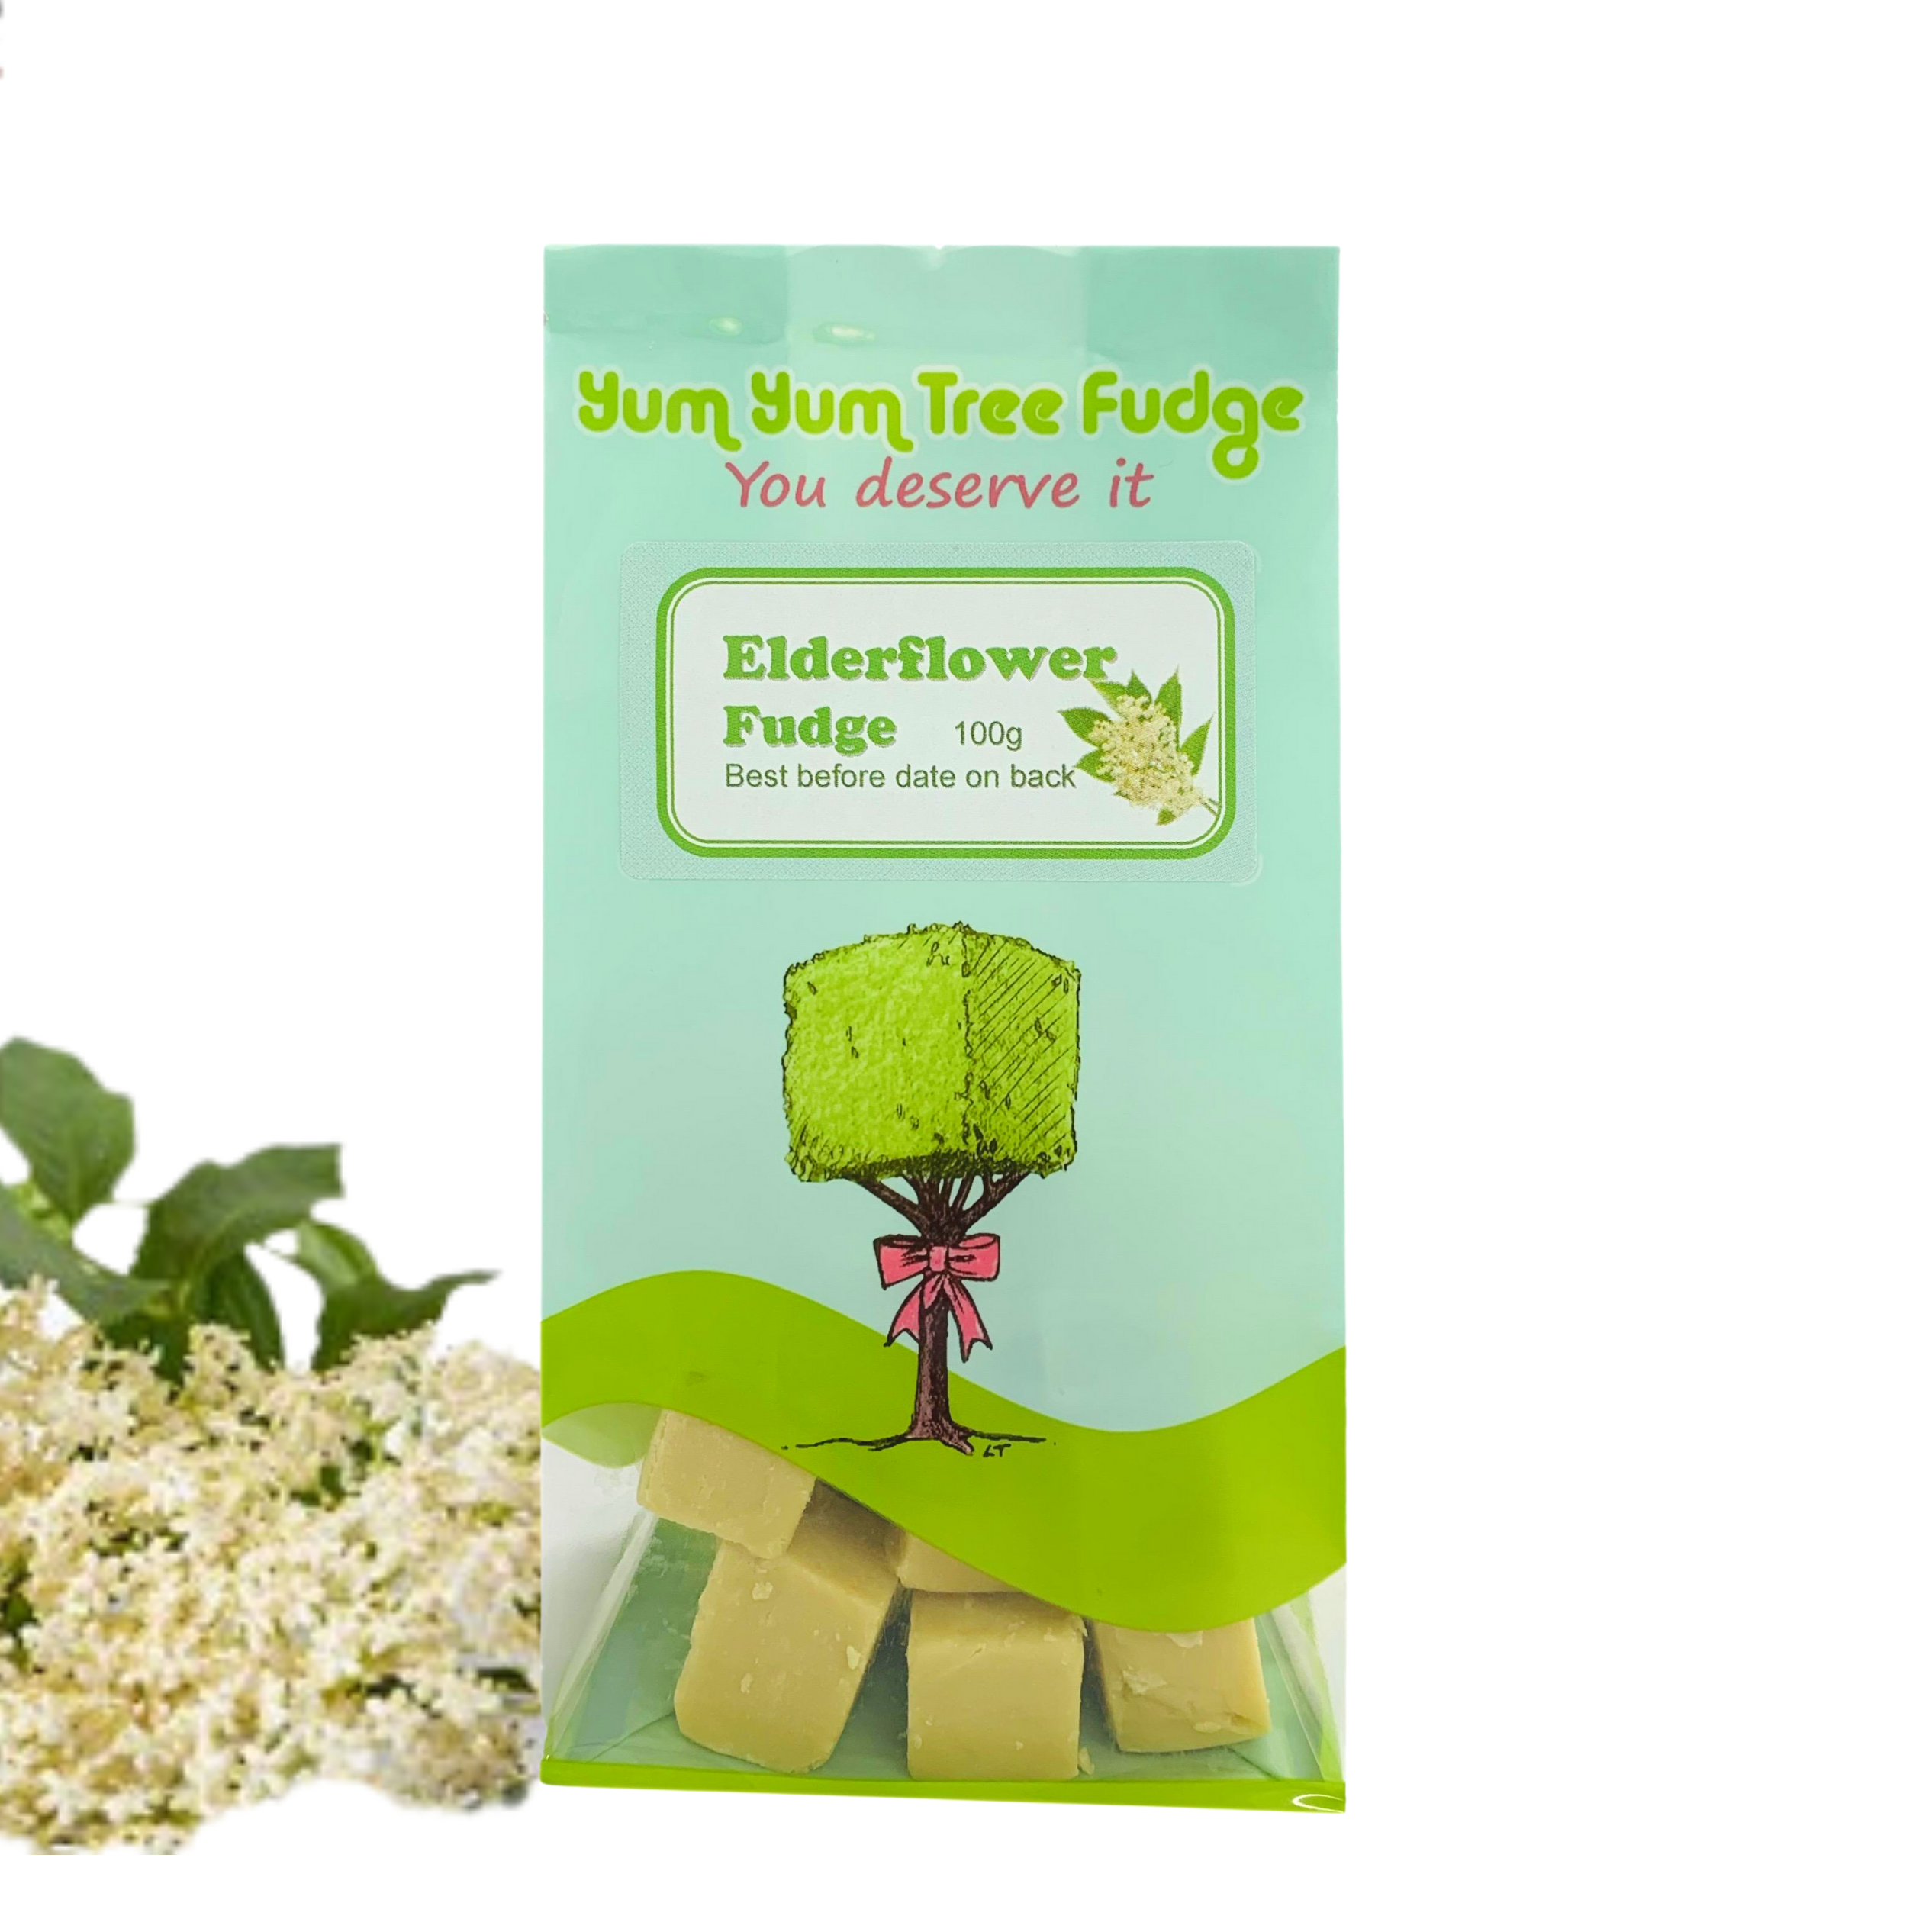 Elderflower fudge by Yum Yum Tree Fudge